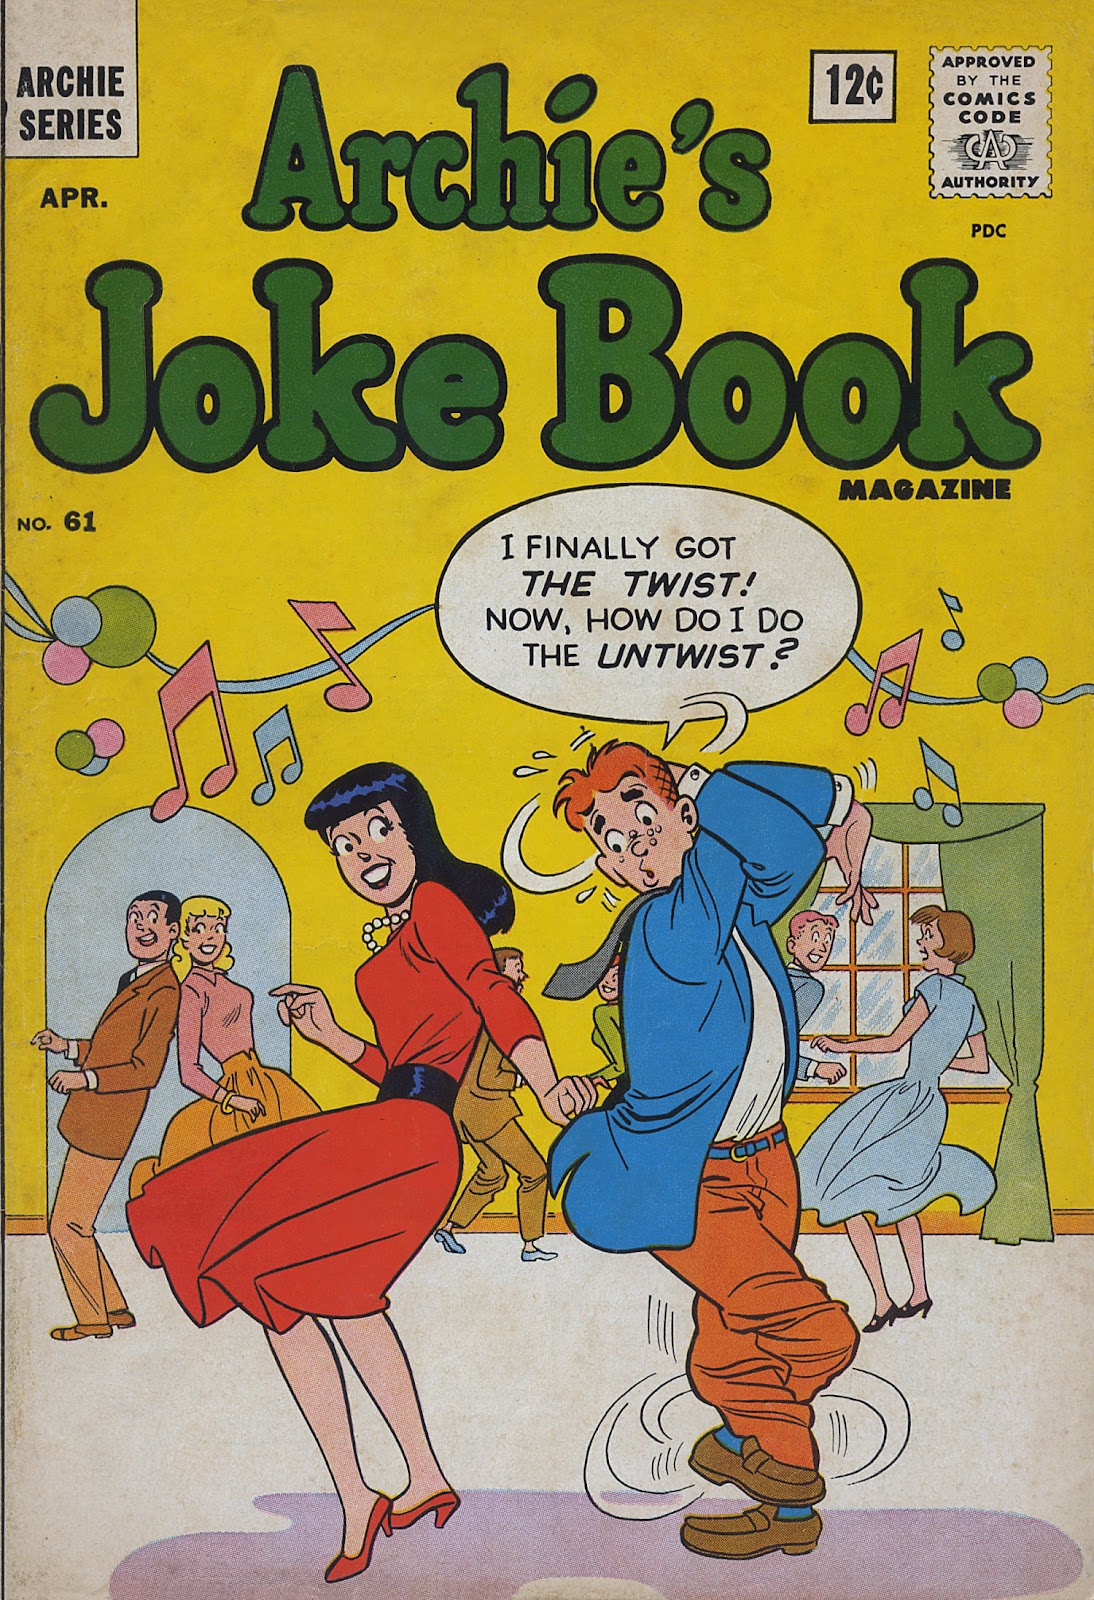 Archie's Joke Book Magazine issue 61 - Page 1